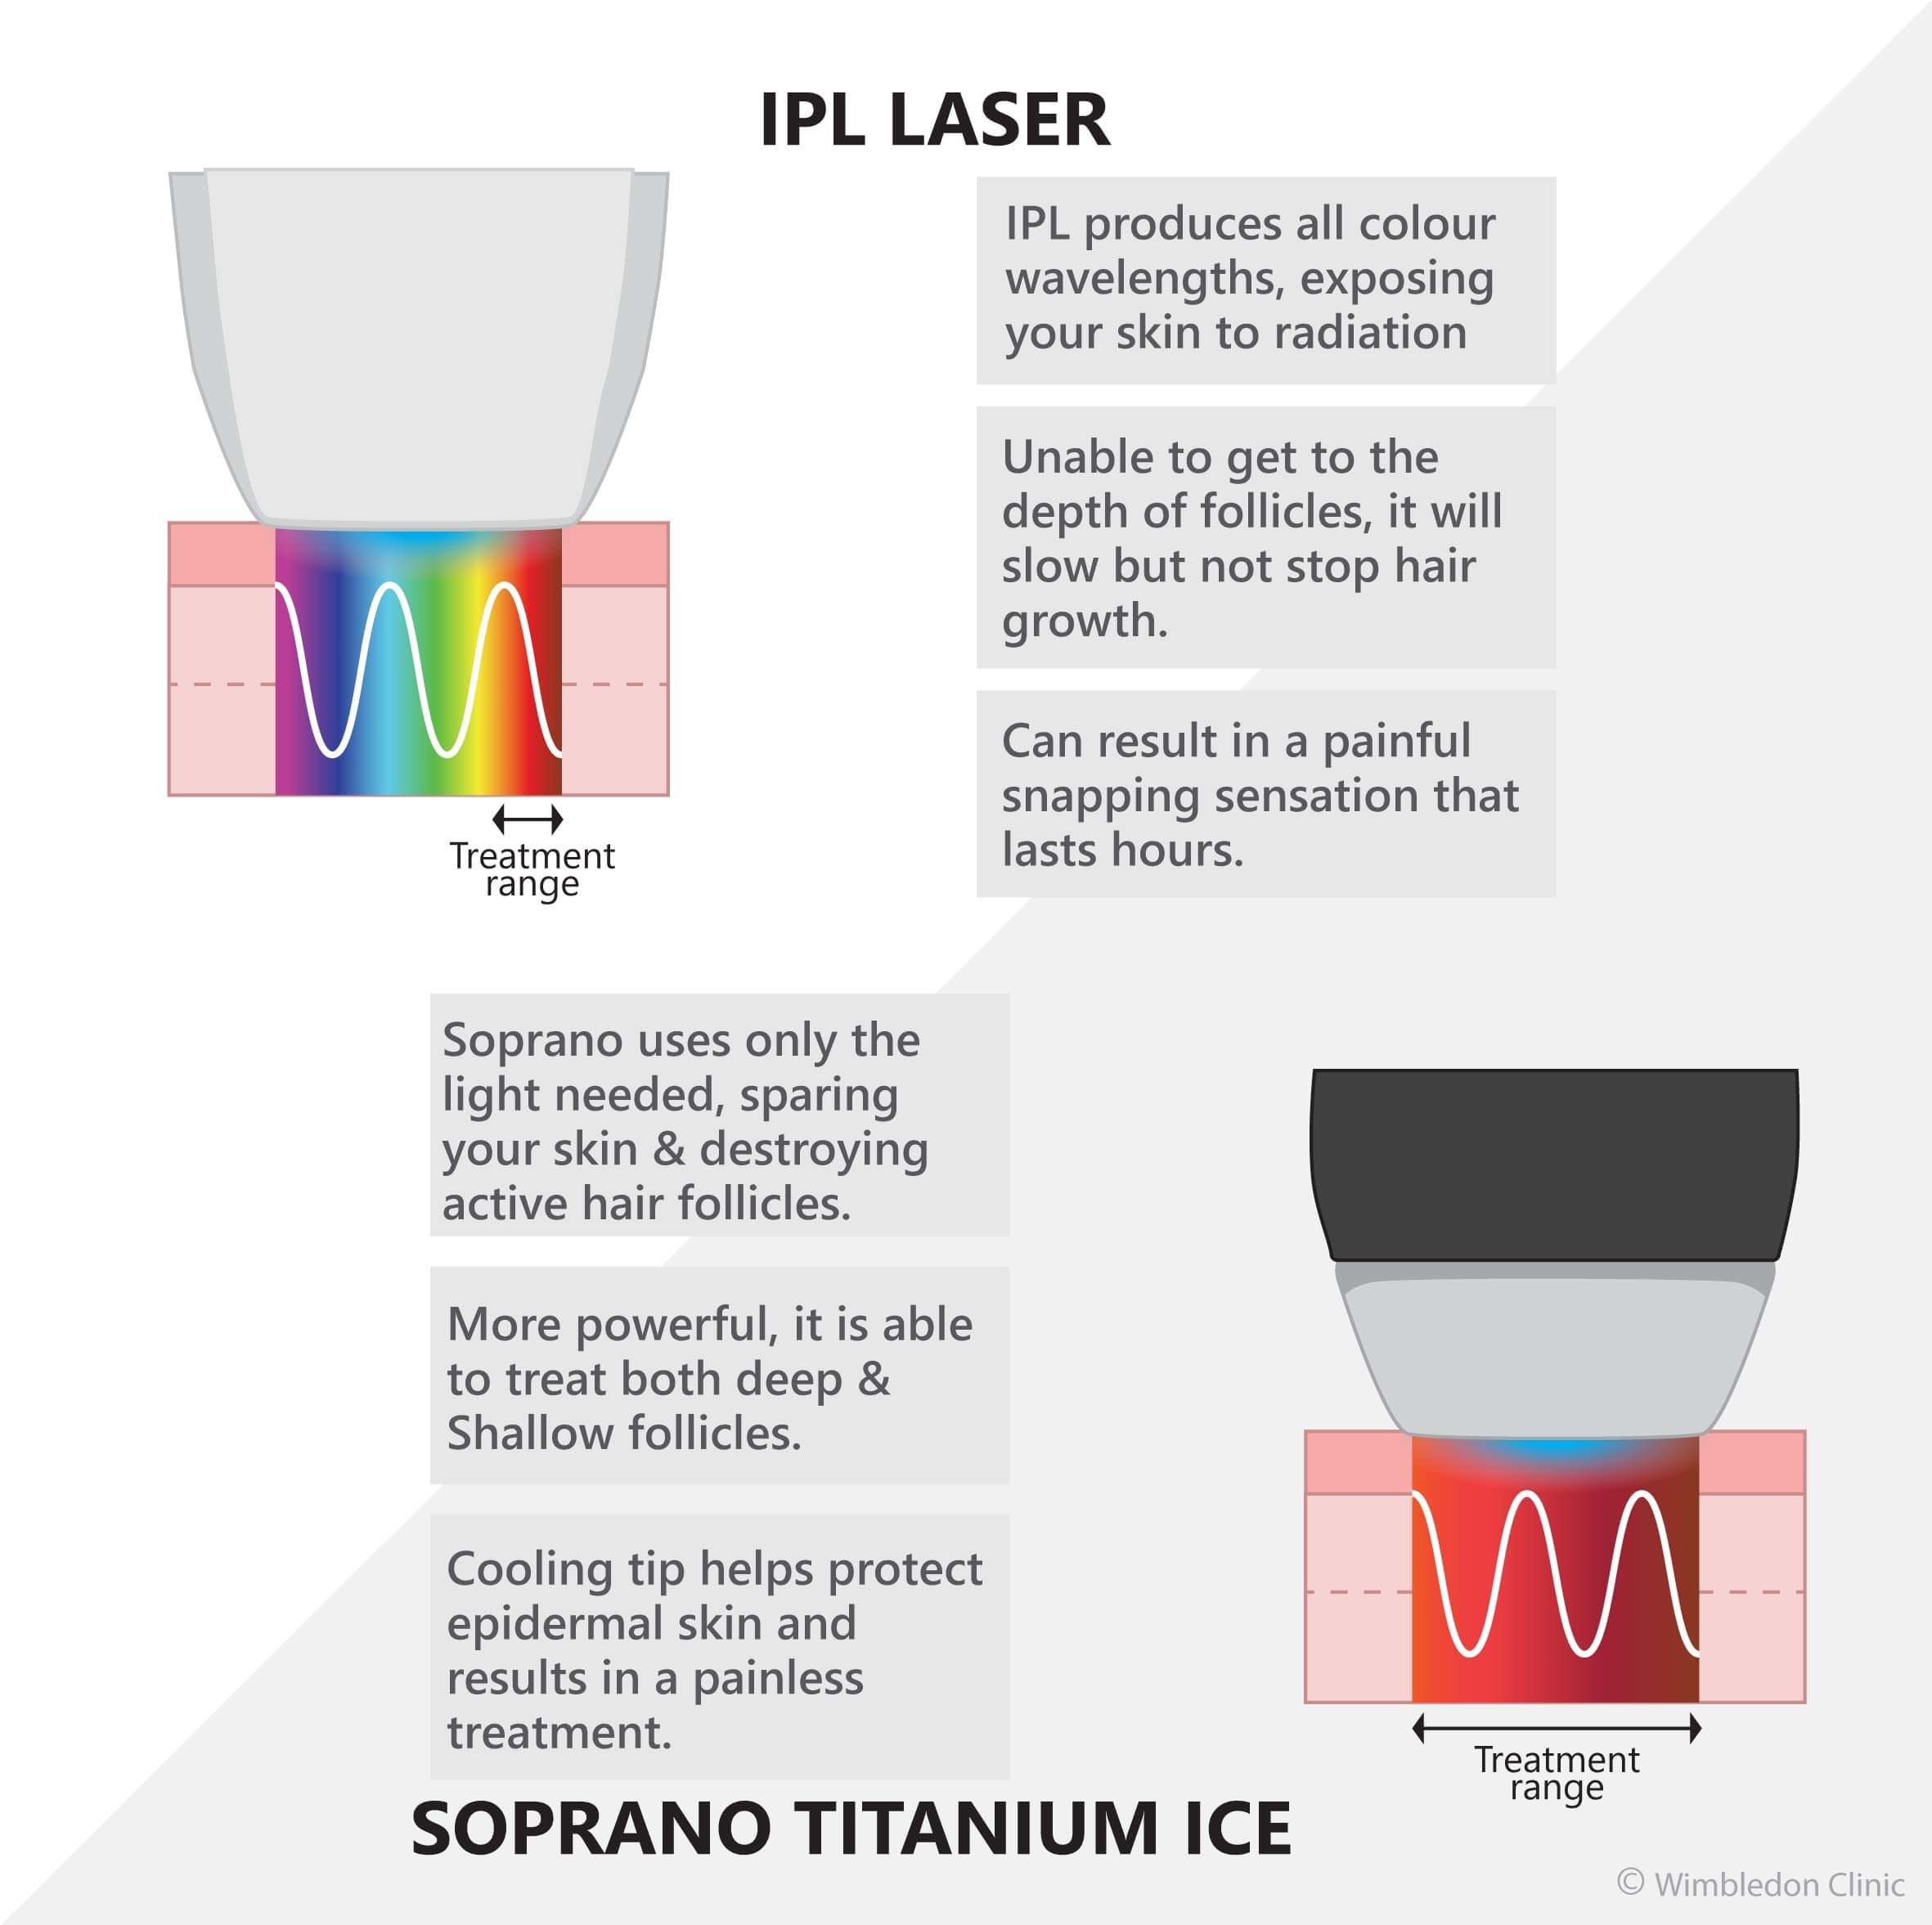 IPL soprano Titanium benefits verses laser wavelength treatment range